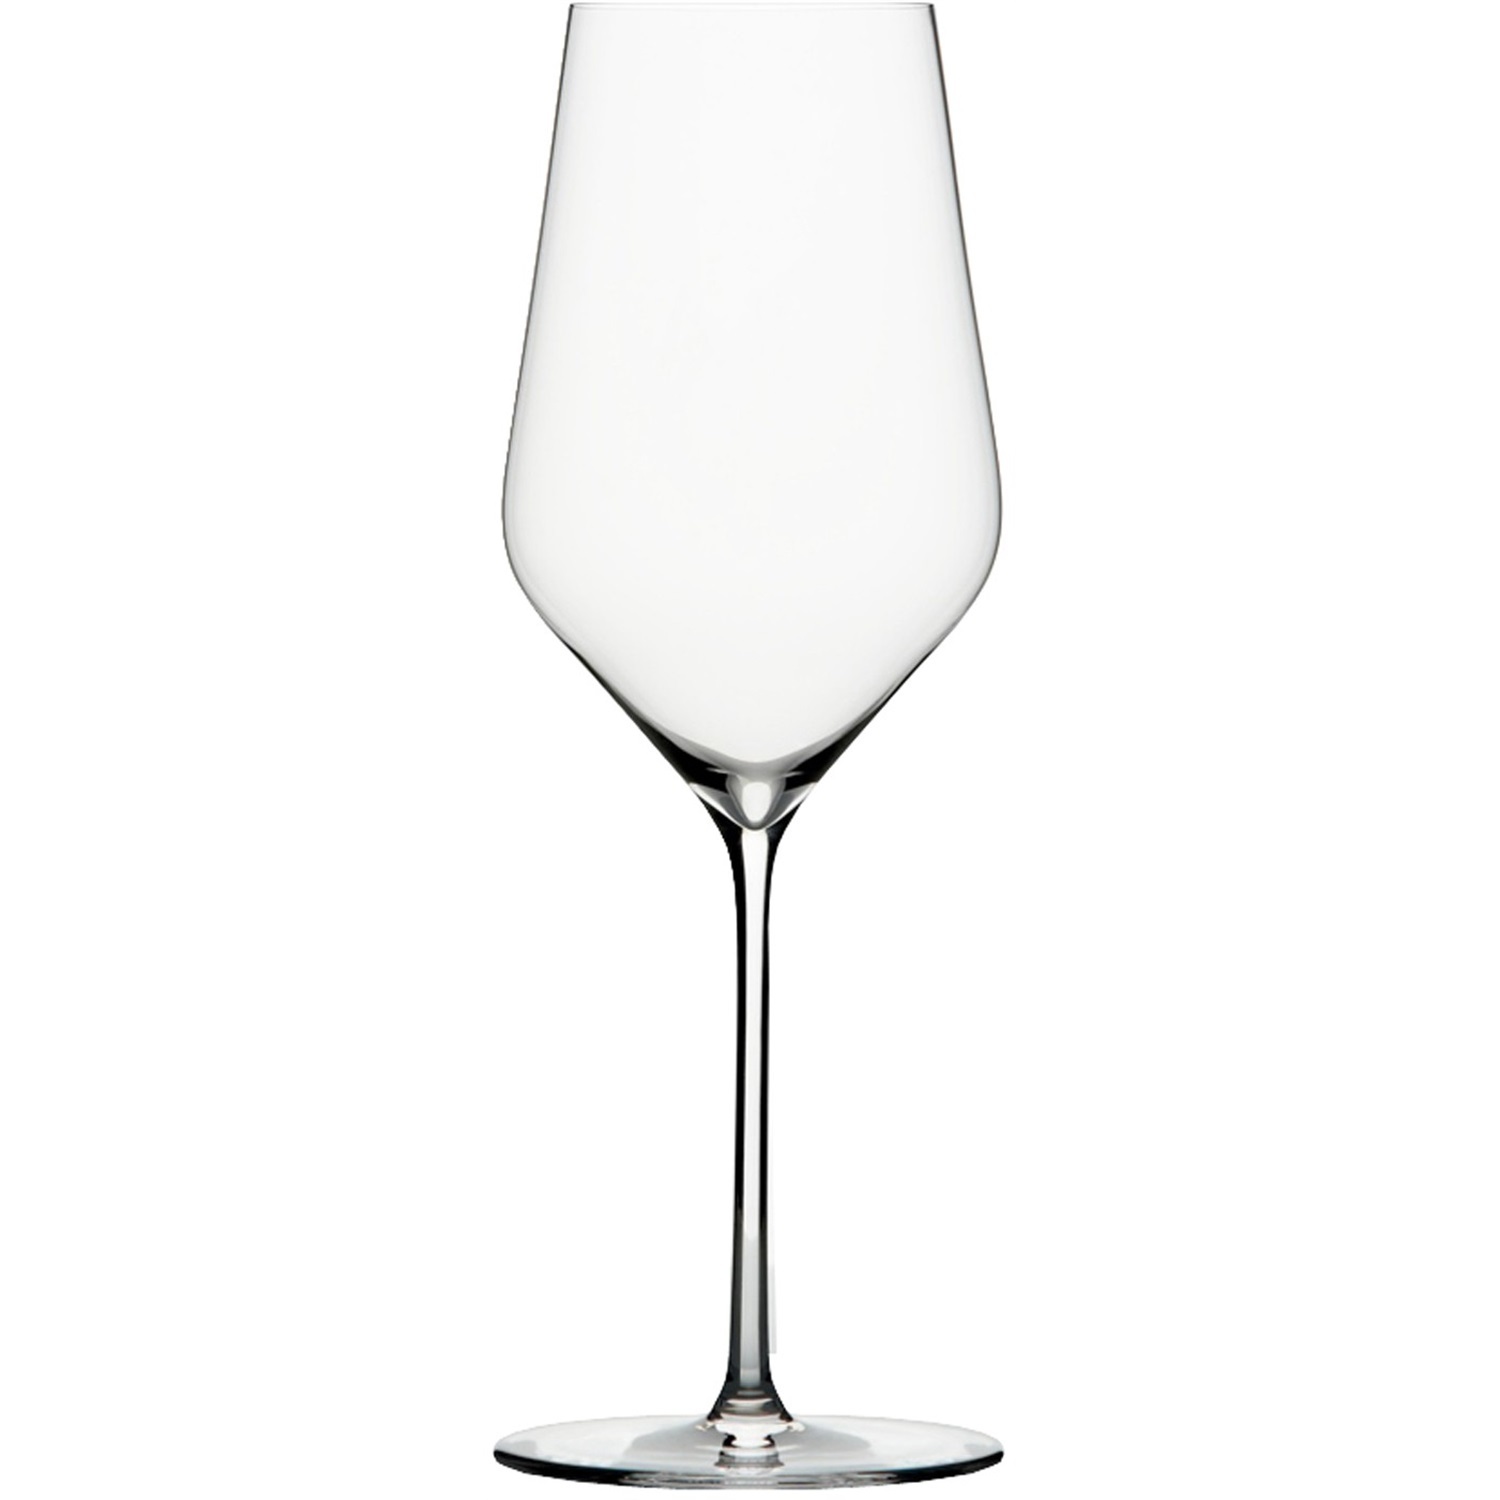 Zalto Zalto Witte wijnglas, 2 stuks